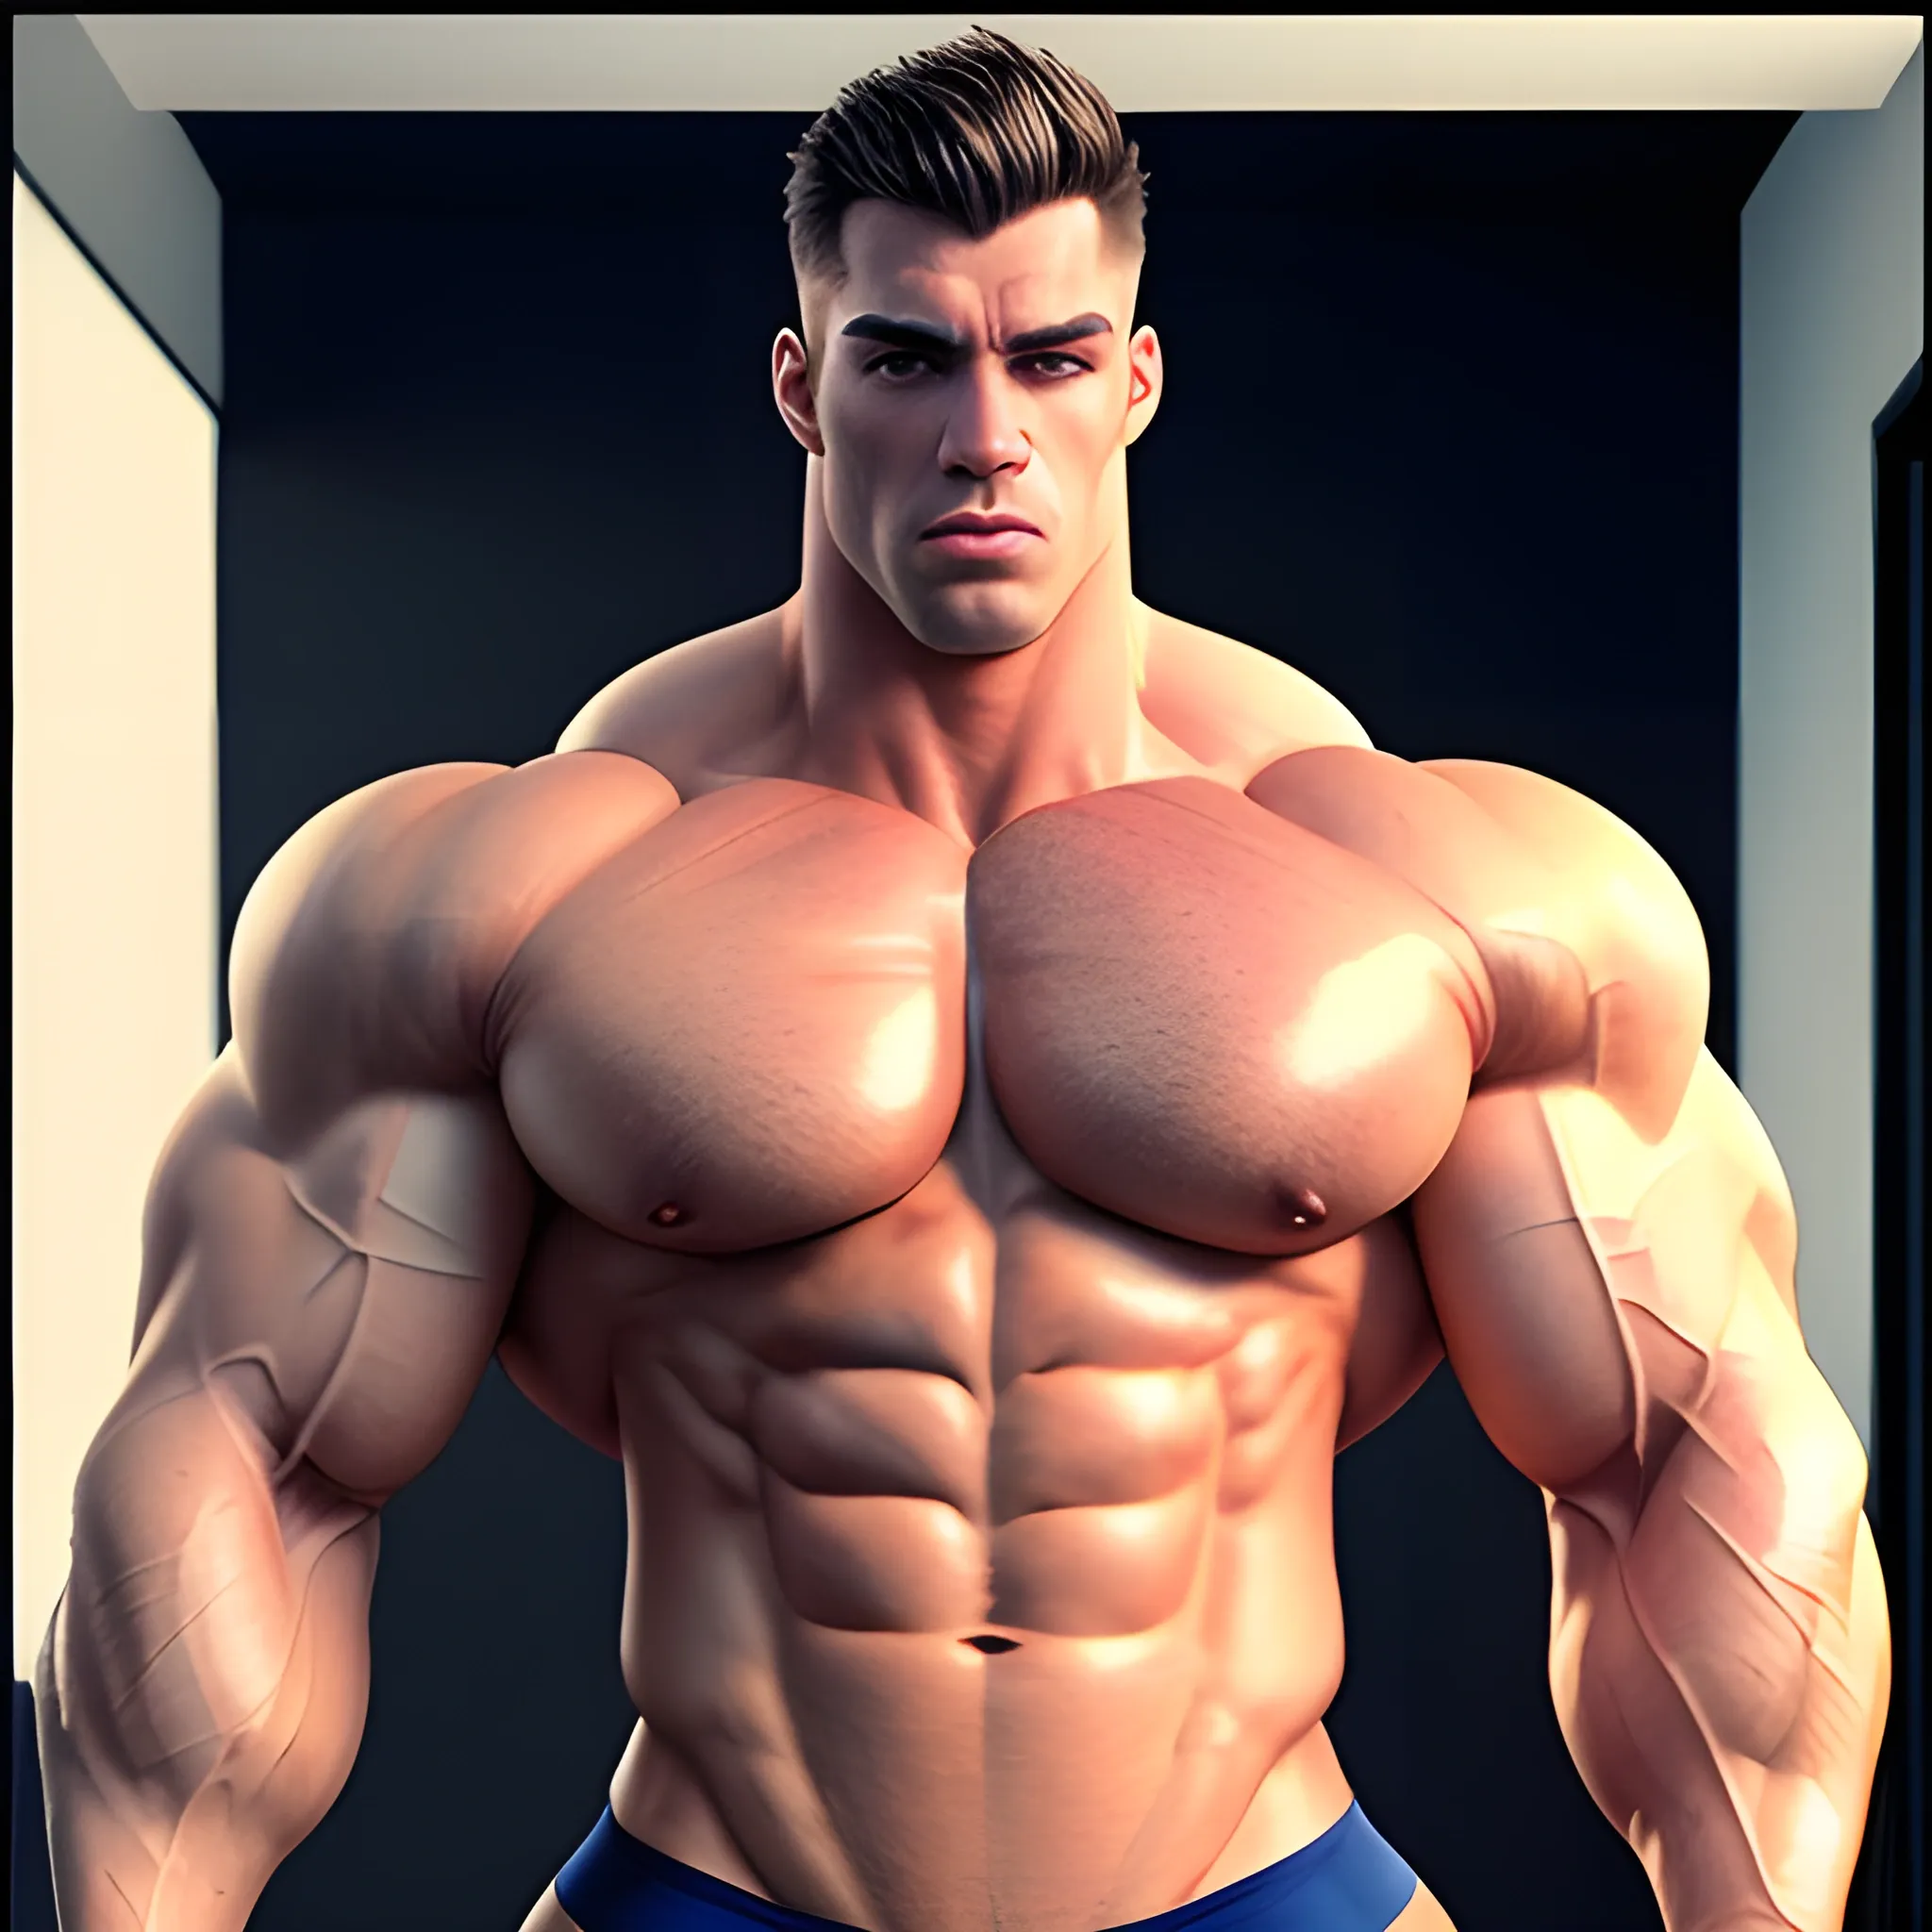 3D hot bodybuilder with massive huge, big man boobs wearing a